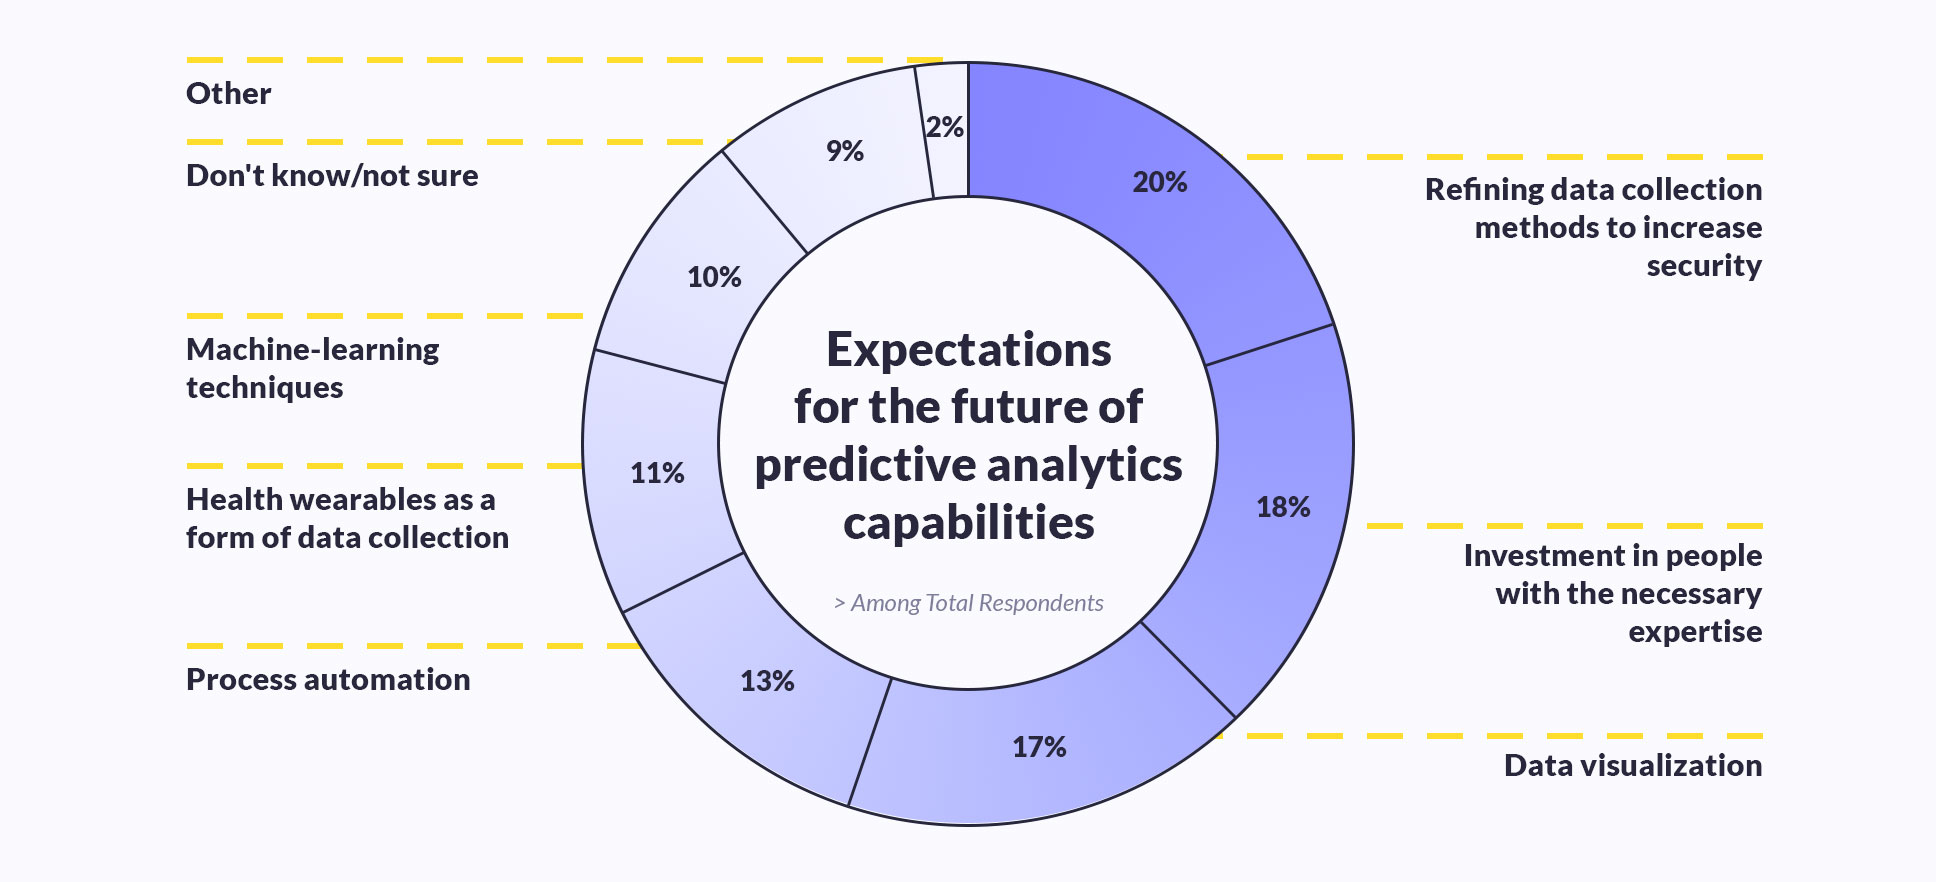 The future of predictive analytics using AI